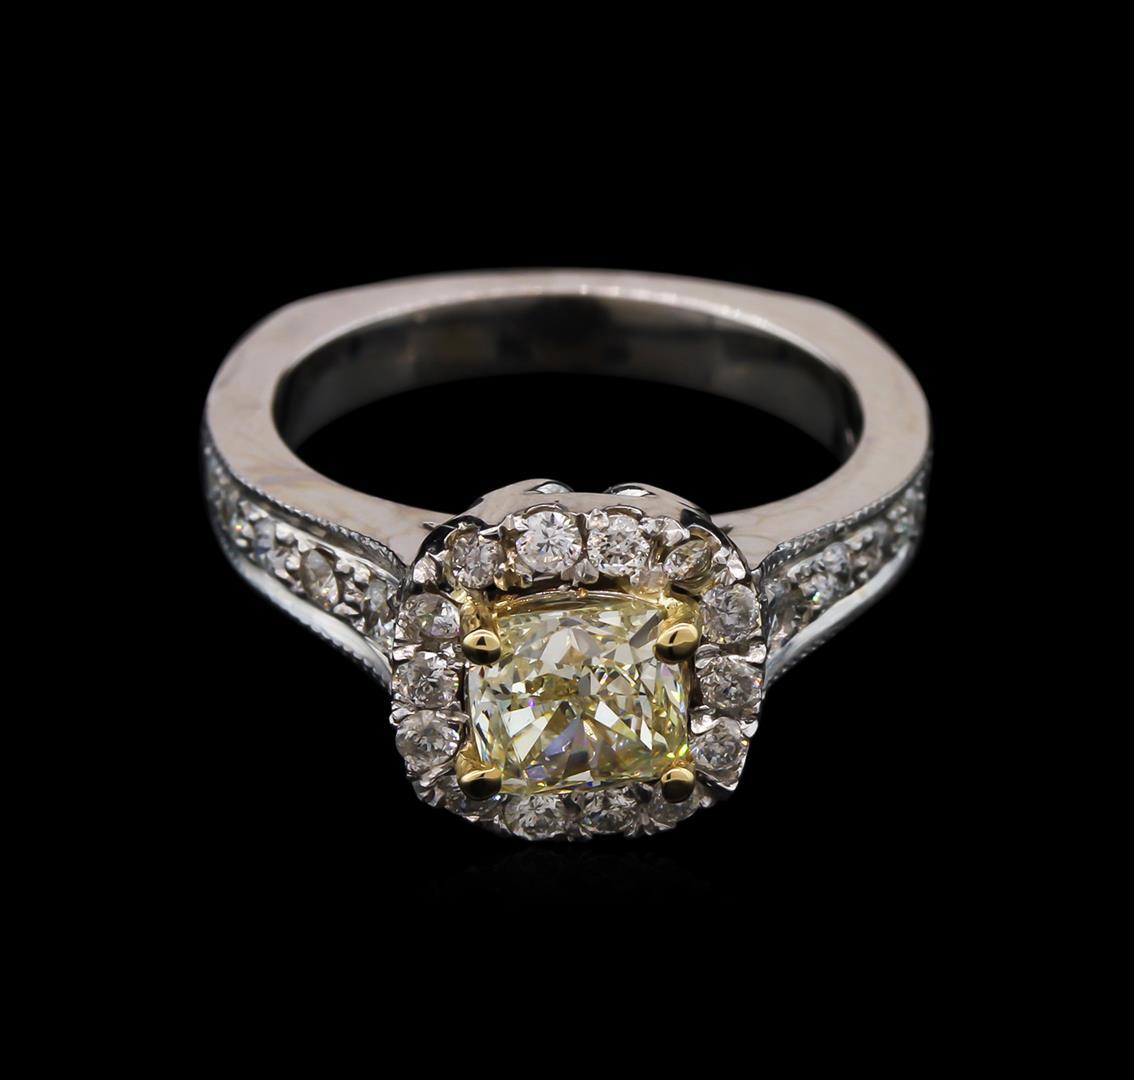 1.71 ctw Light Yellow Diamond Ring - 14KT White Gold